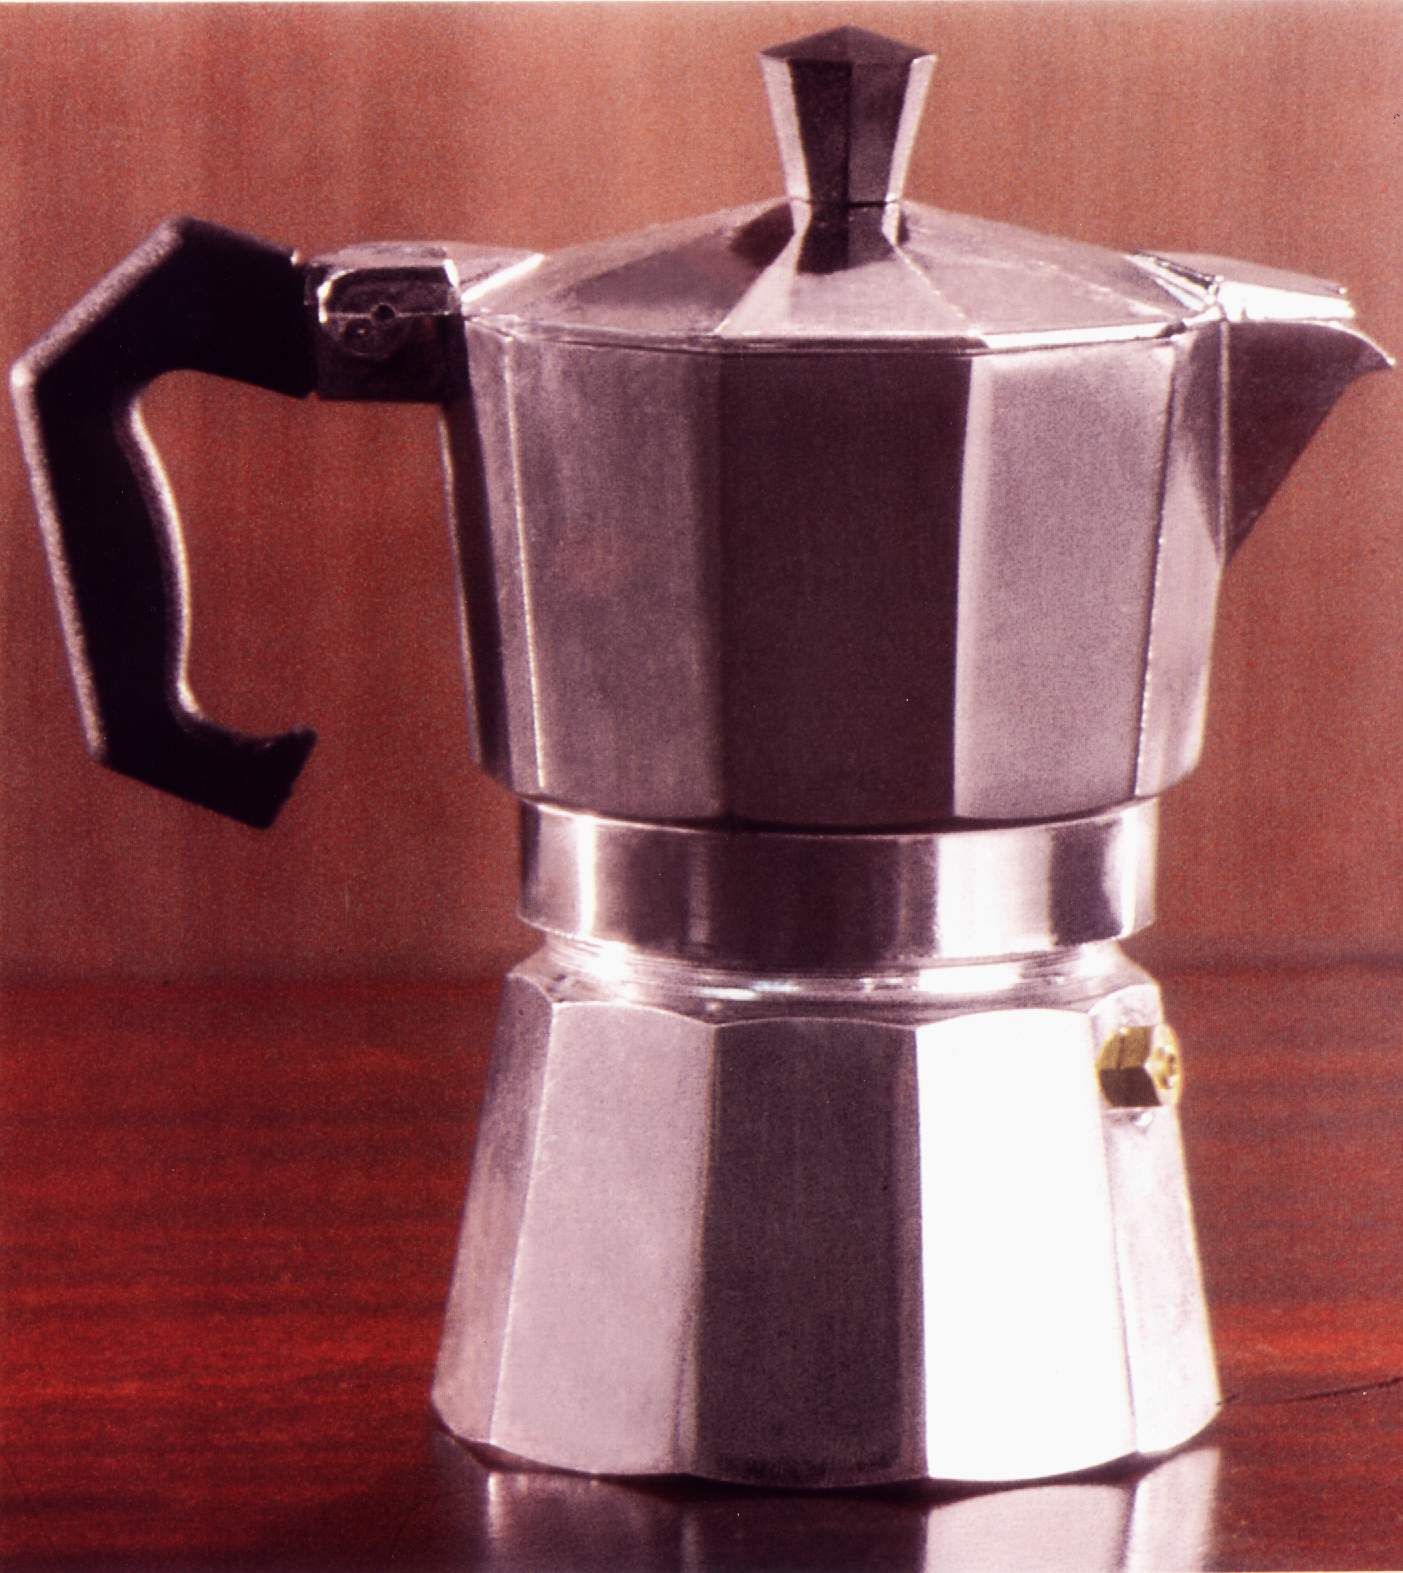 Expresso coffee maker